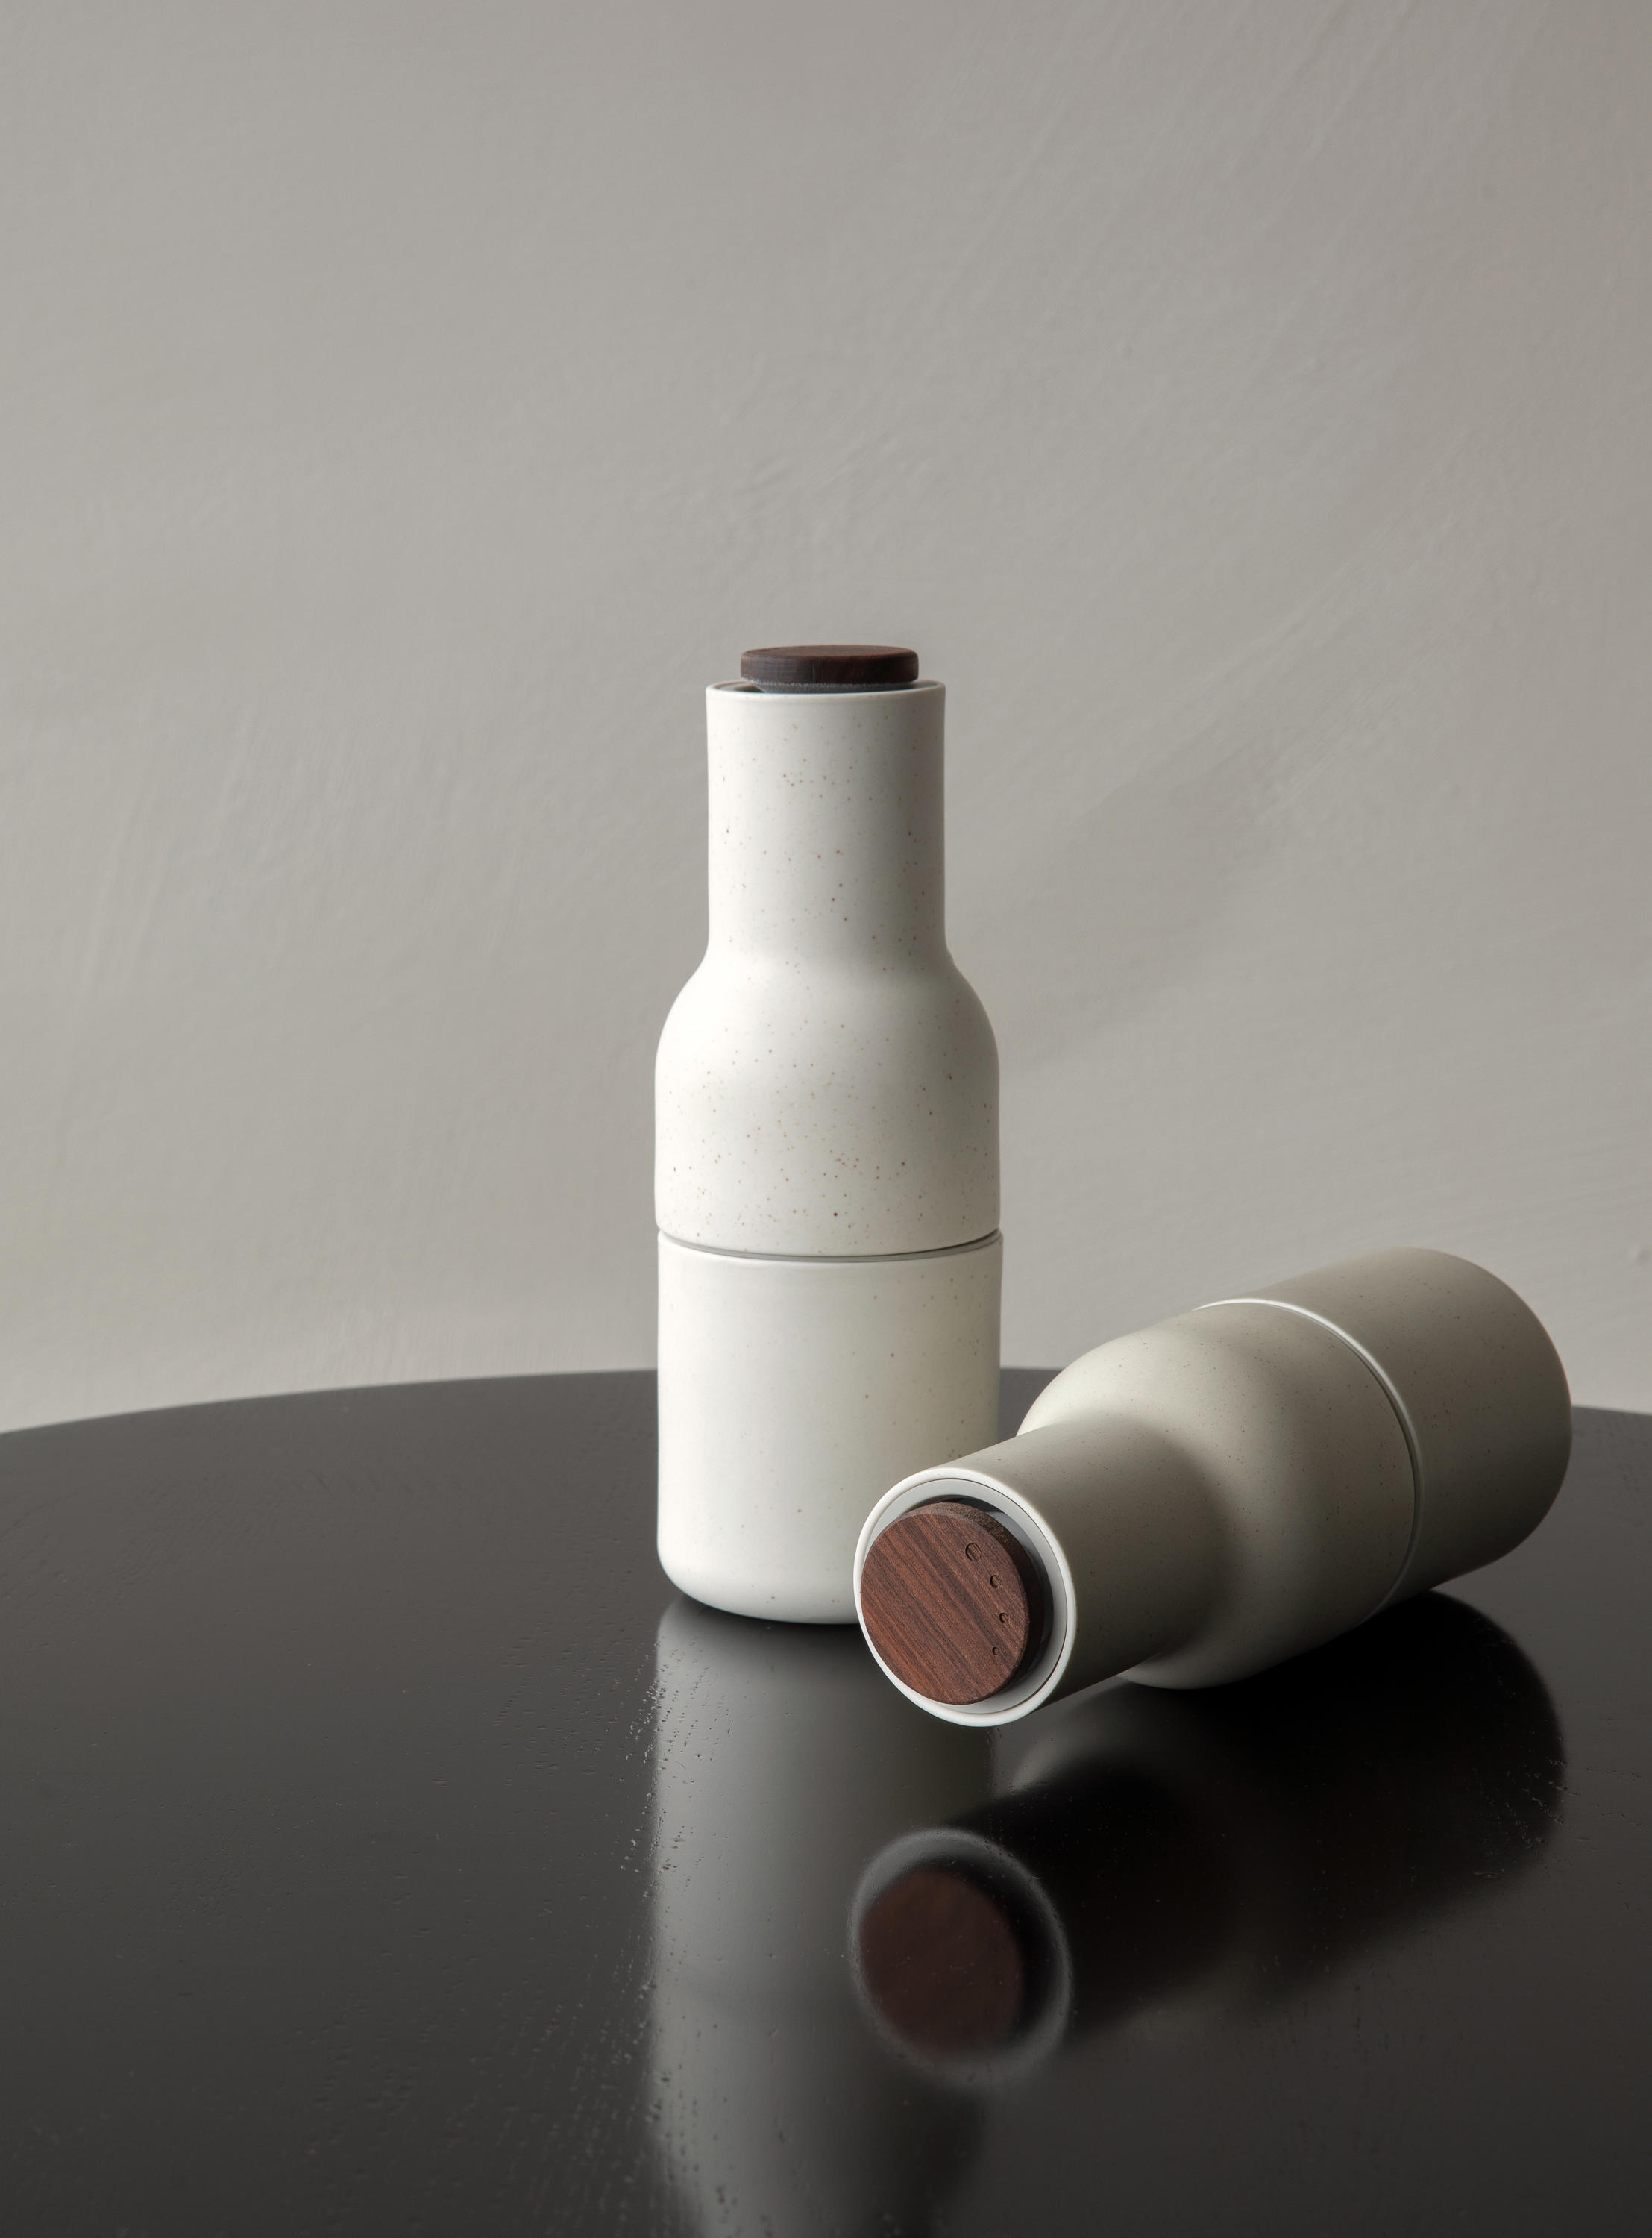 https://image.architonic.com/pfm3-3/2106805/bottle-grinder-ceramic-2-fam-g-arcit18.jpg